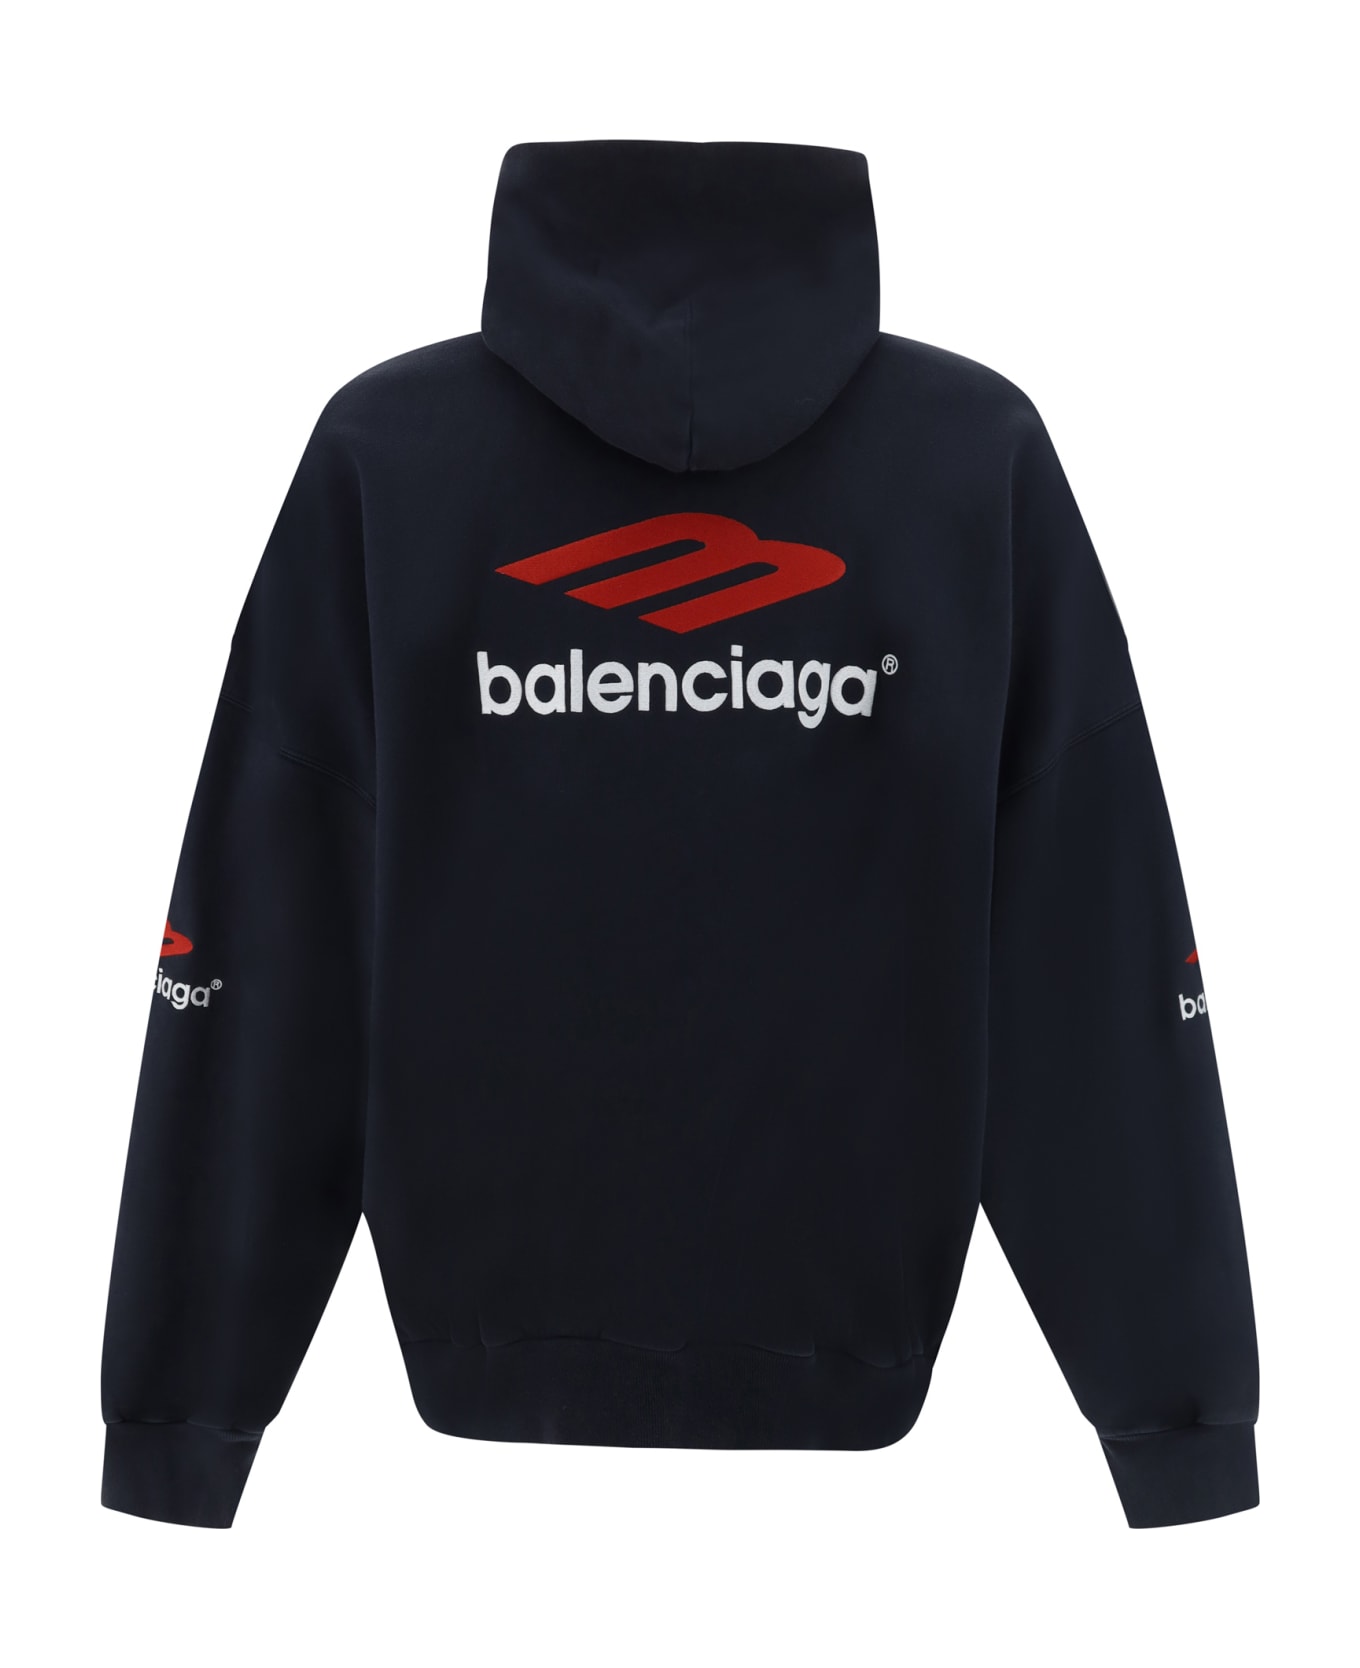 Balenciaga 3b Icon Embroidered Hoodie - Fade Black/red/white フリース